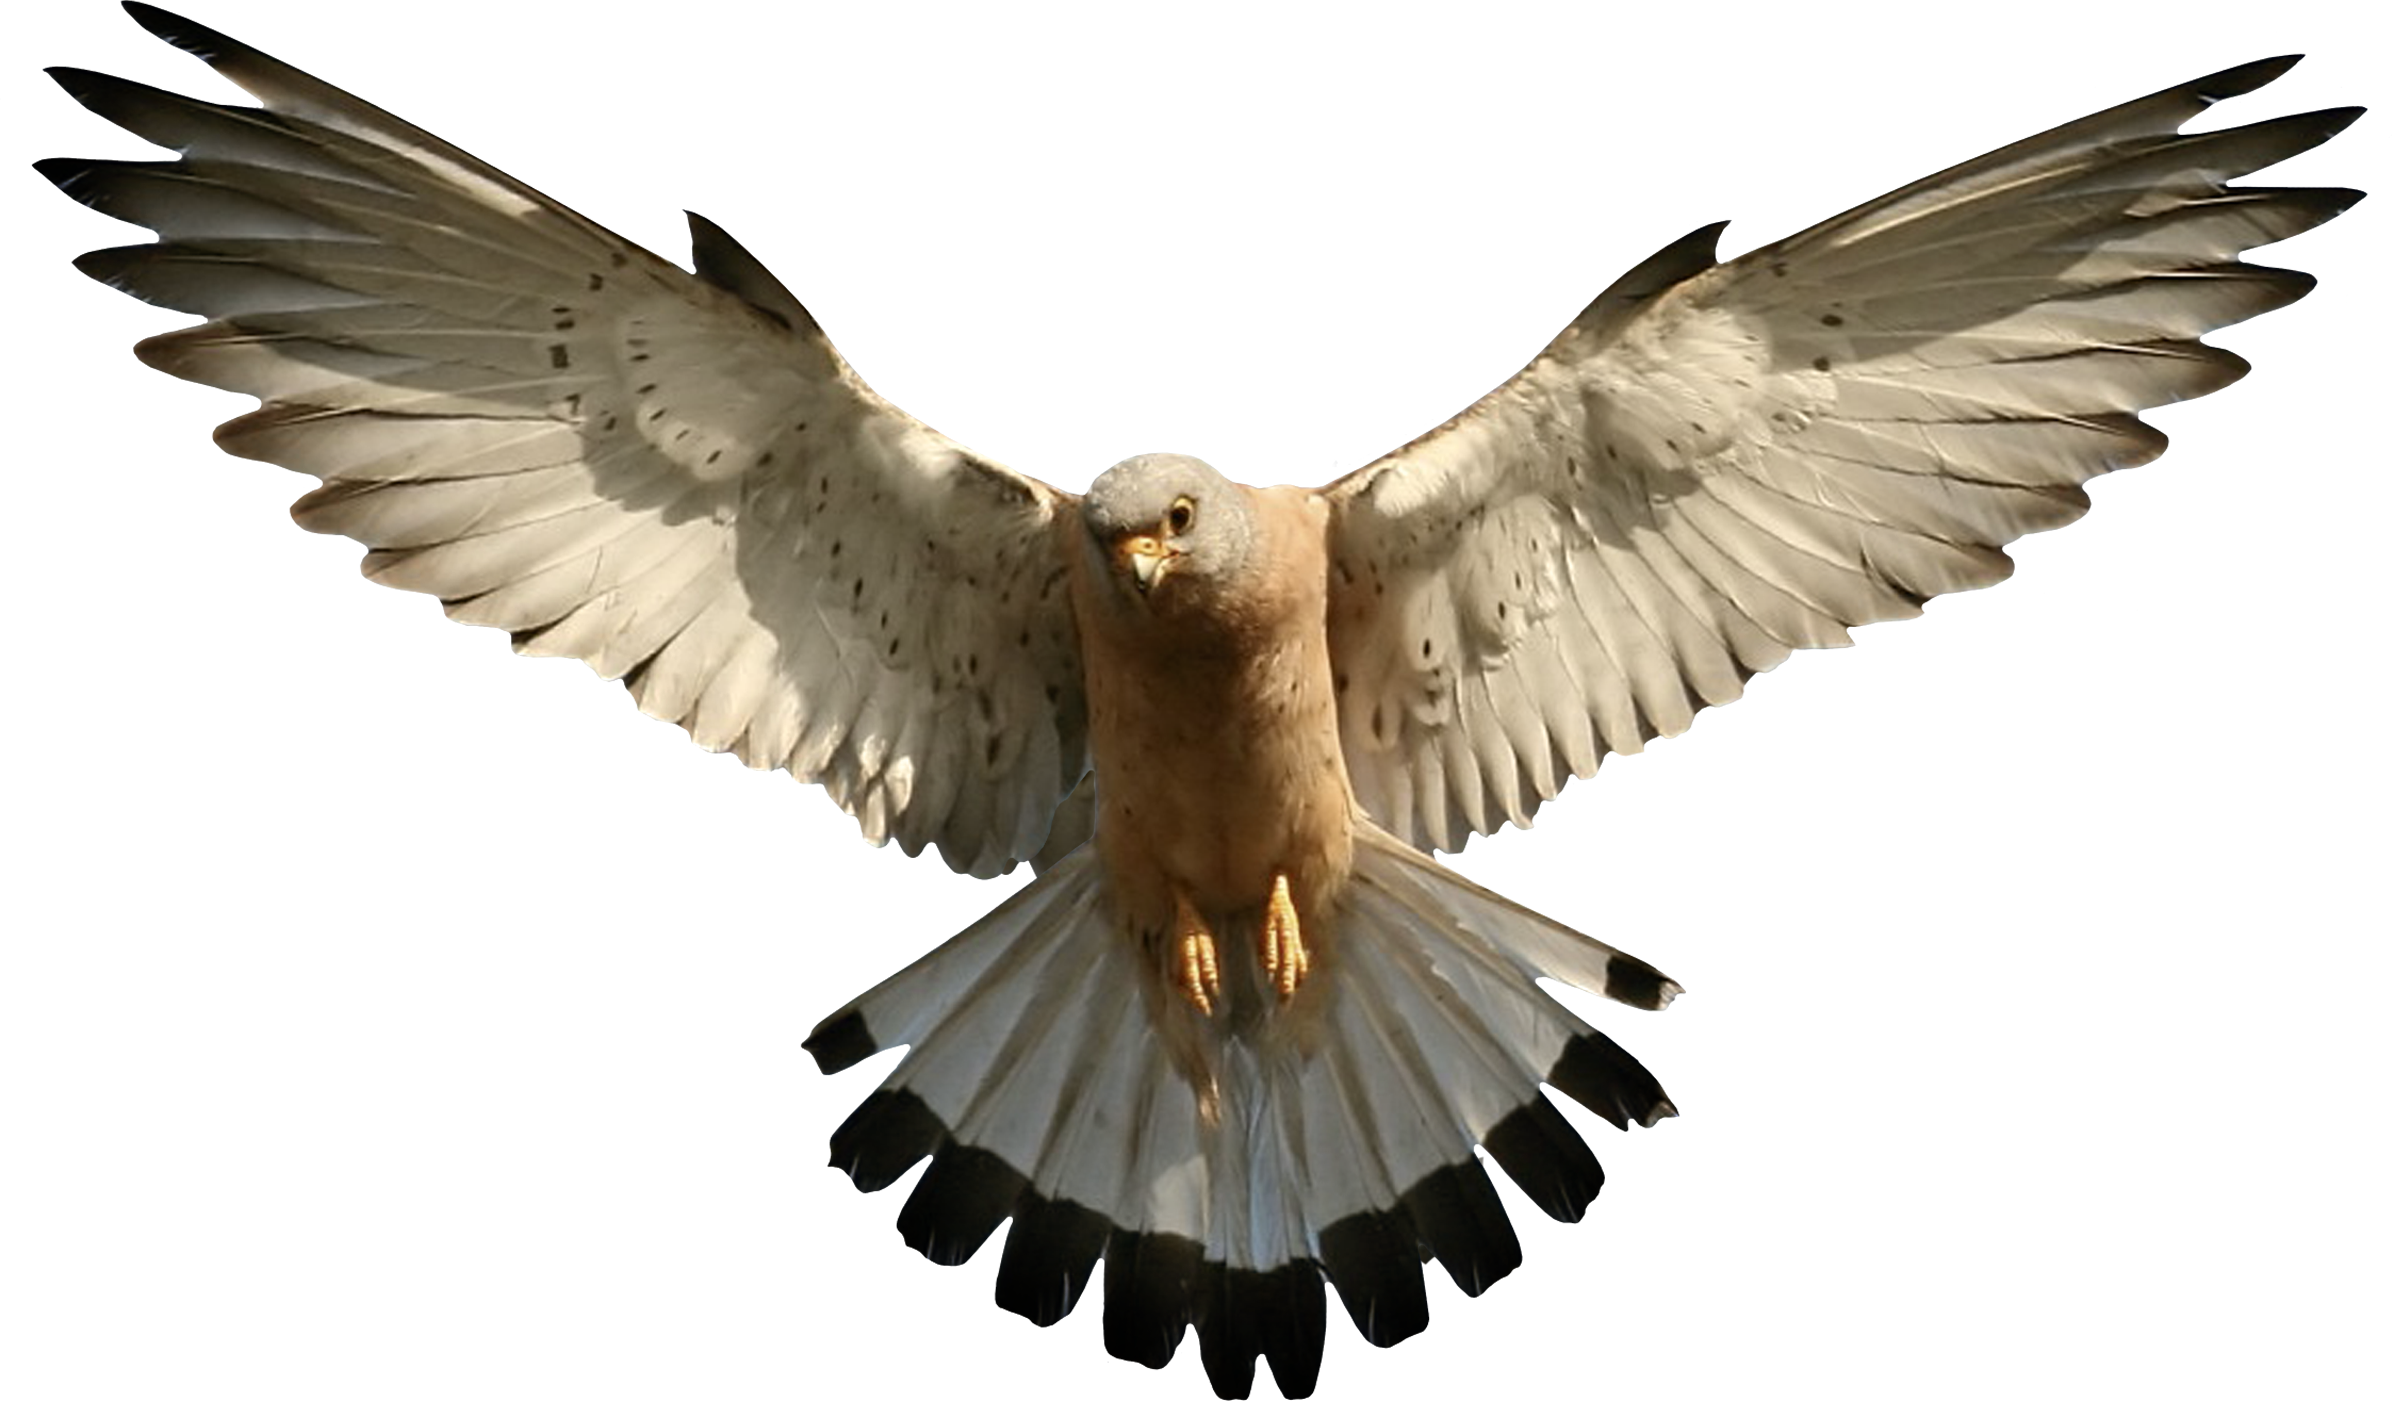 Eagle Png Image, Free Download - Eagle, Transparent background PNG HD thumbnail